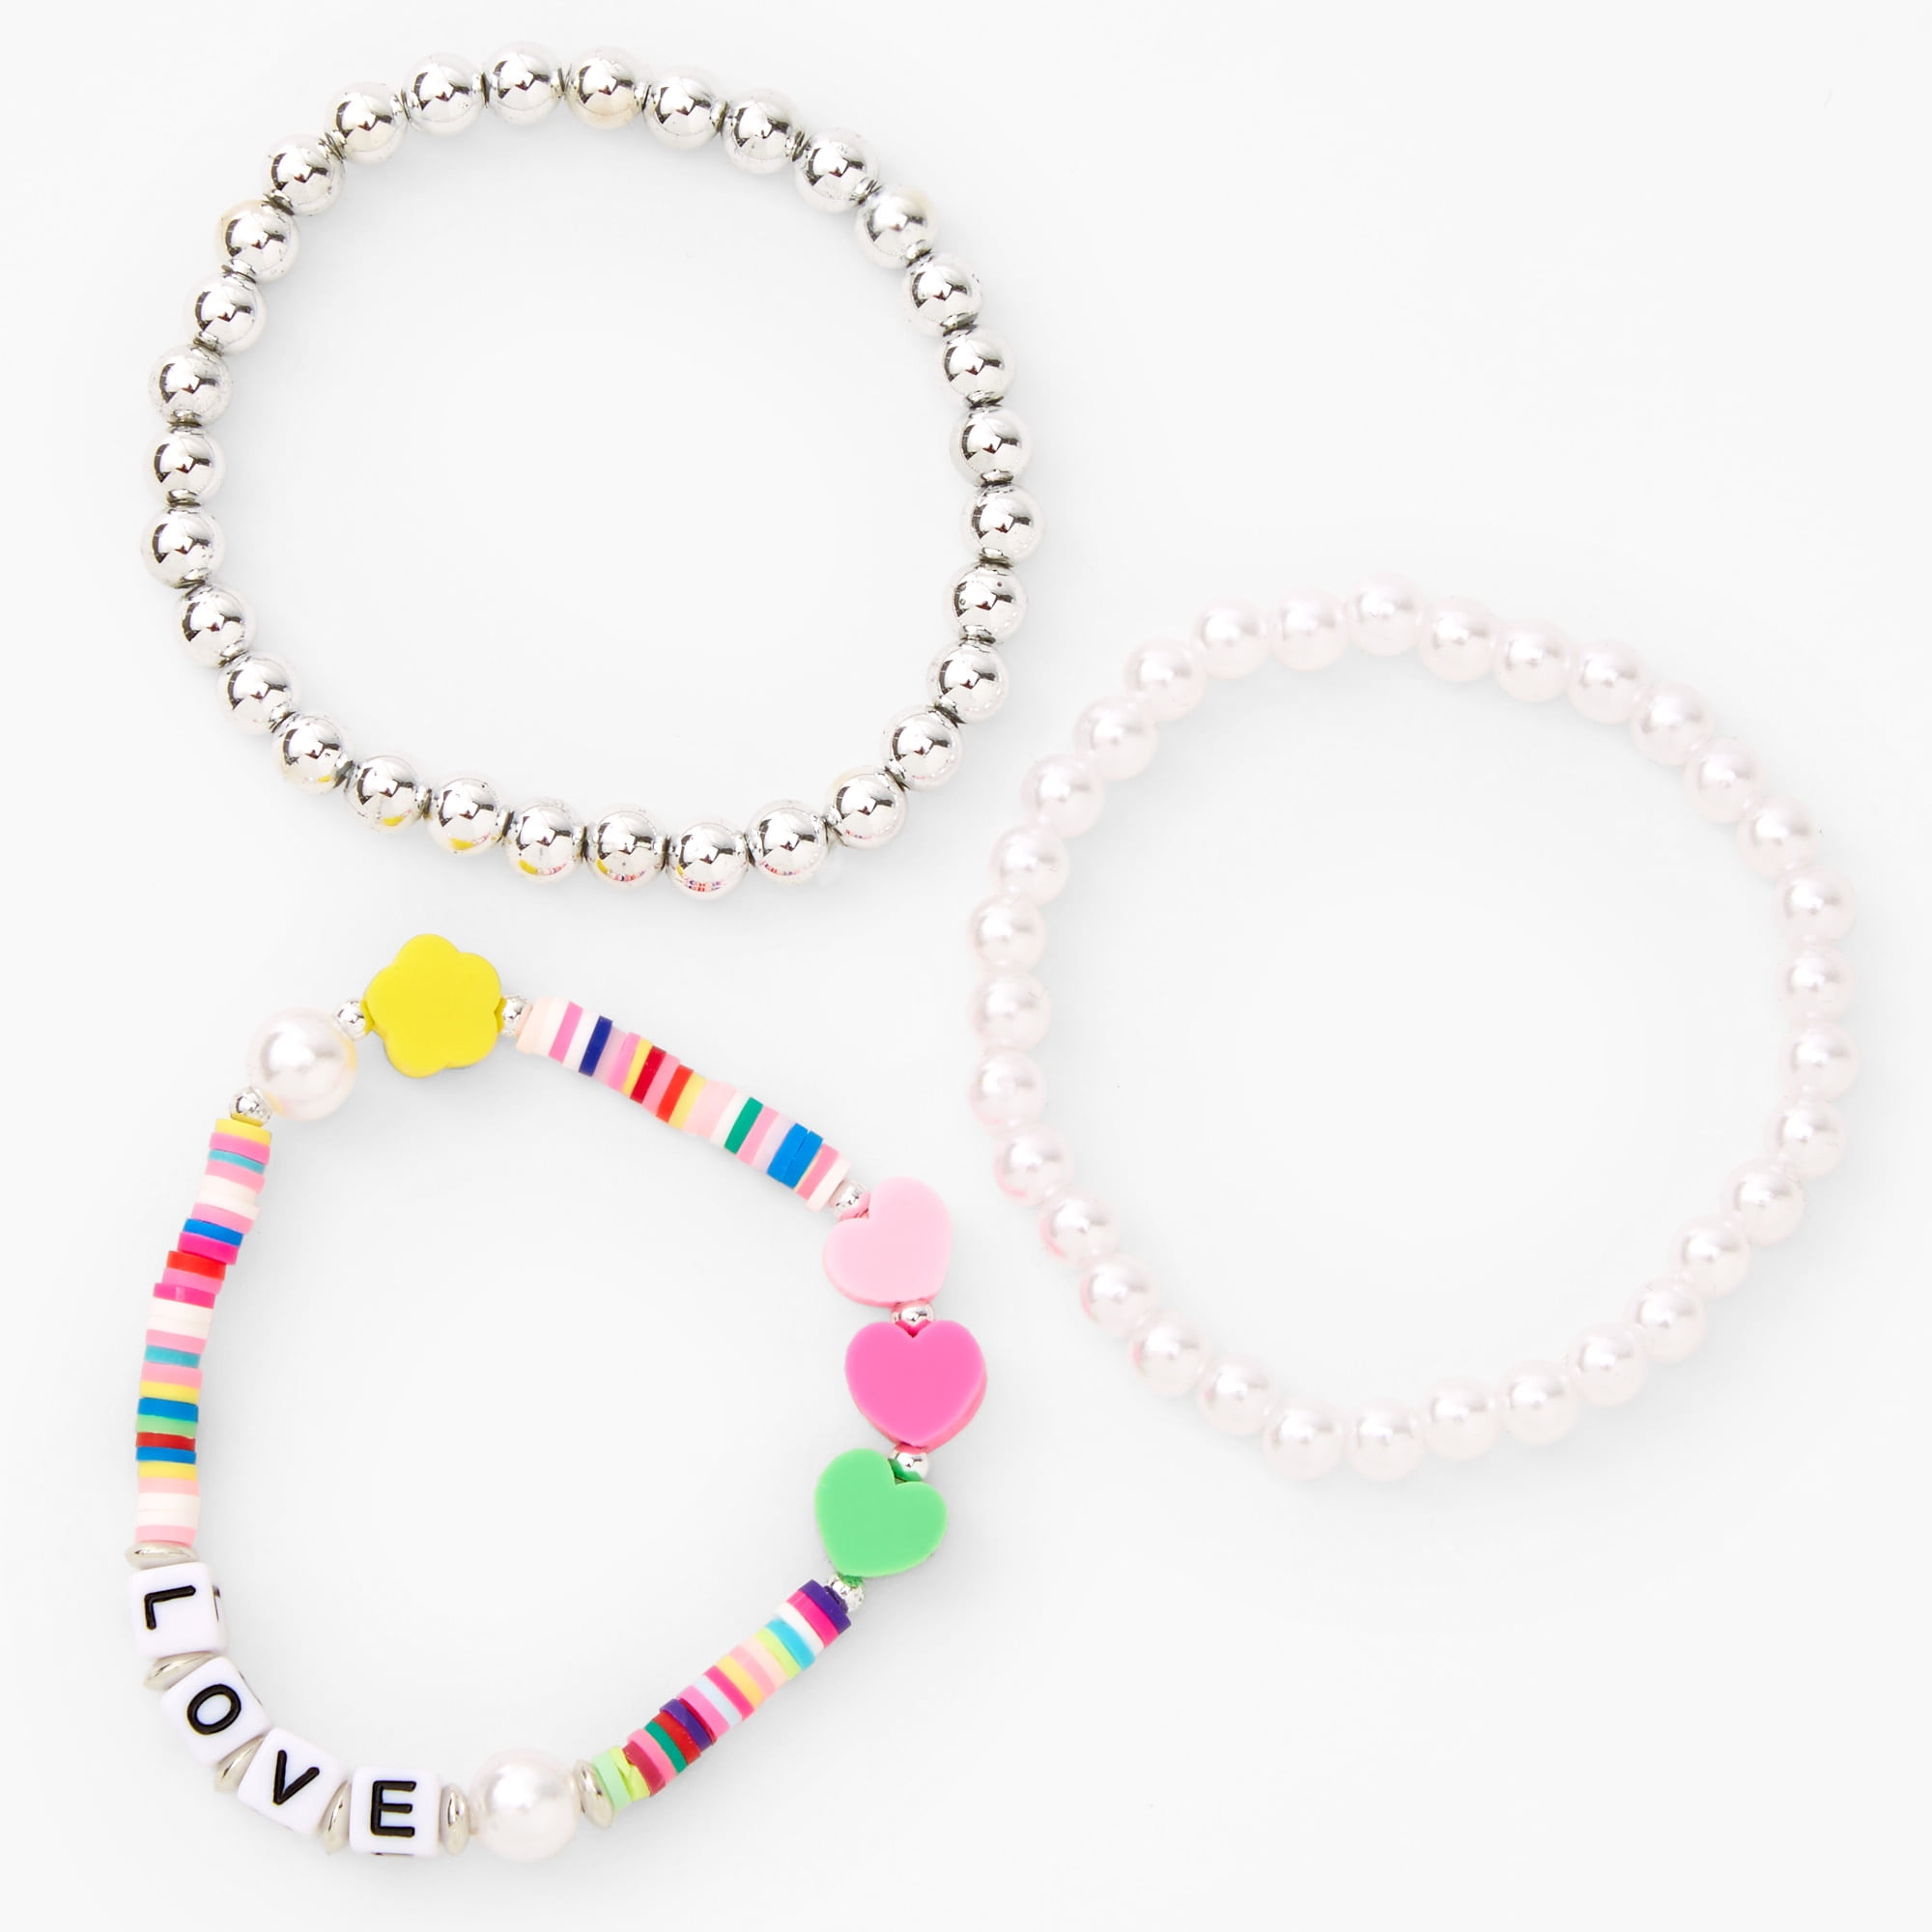 Rainbow Bead Stretch Friendship Bracelets - 5 Pack